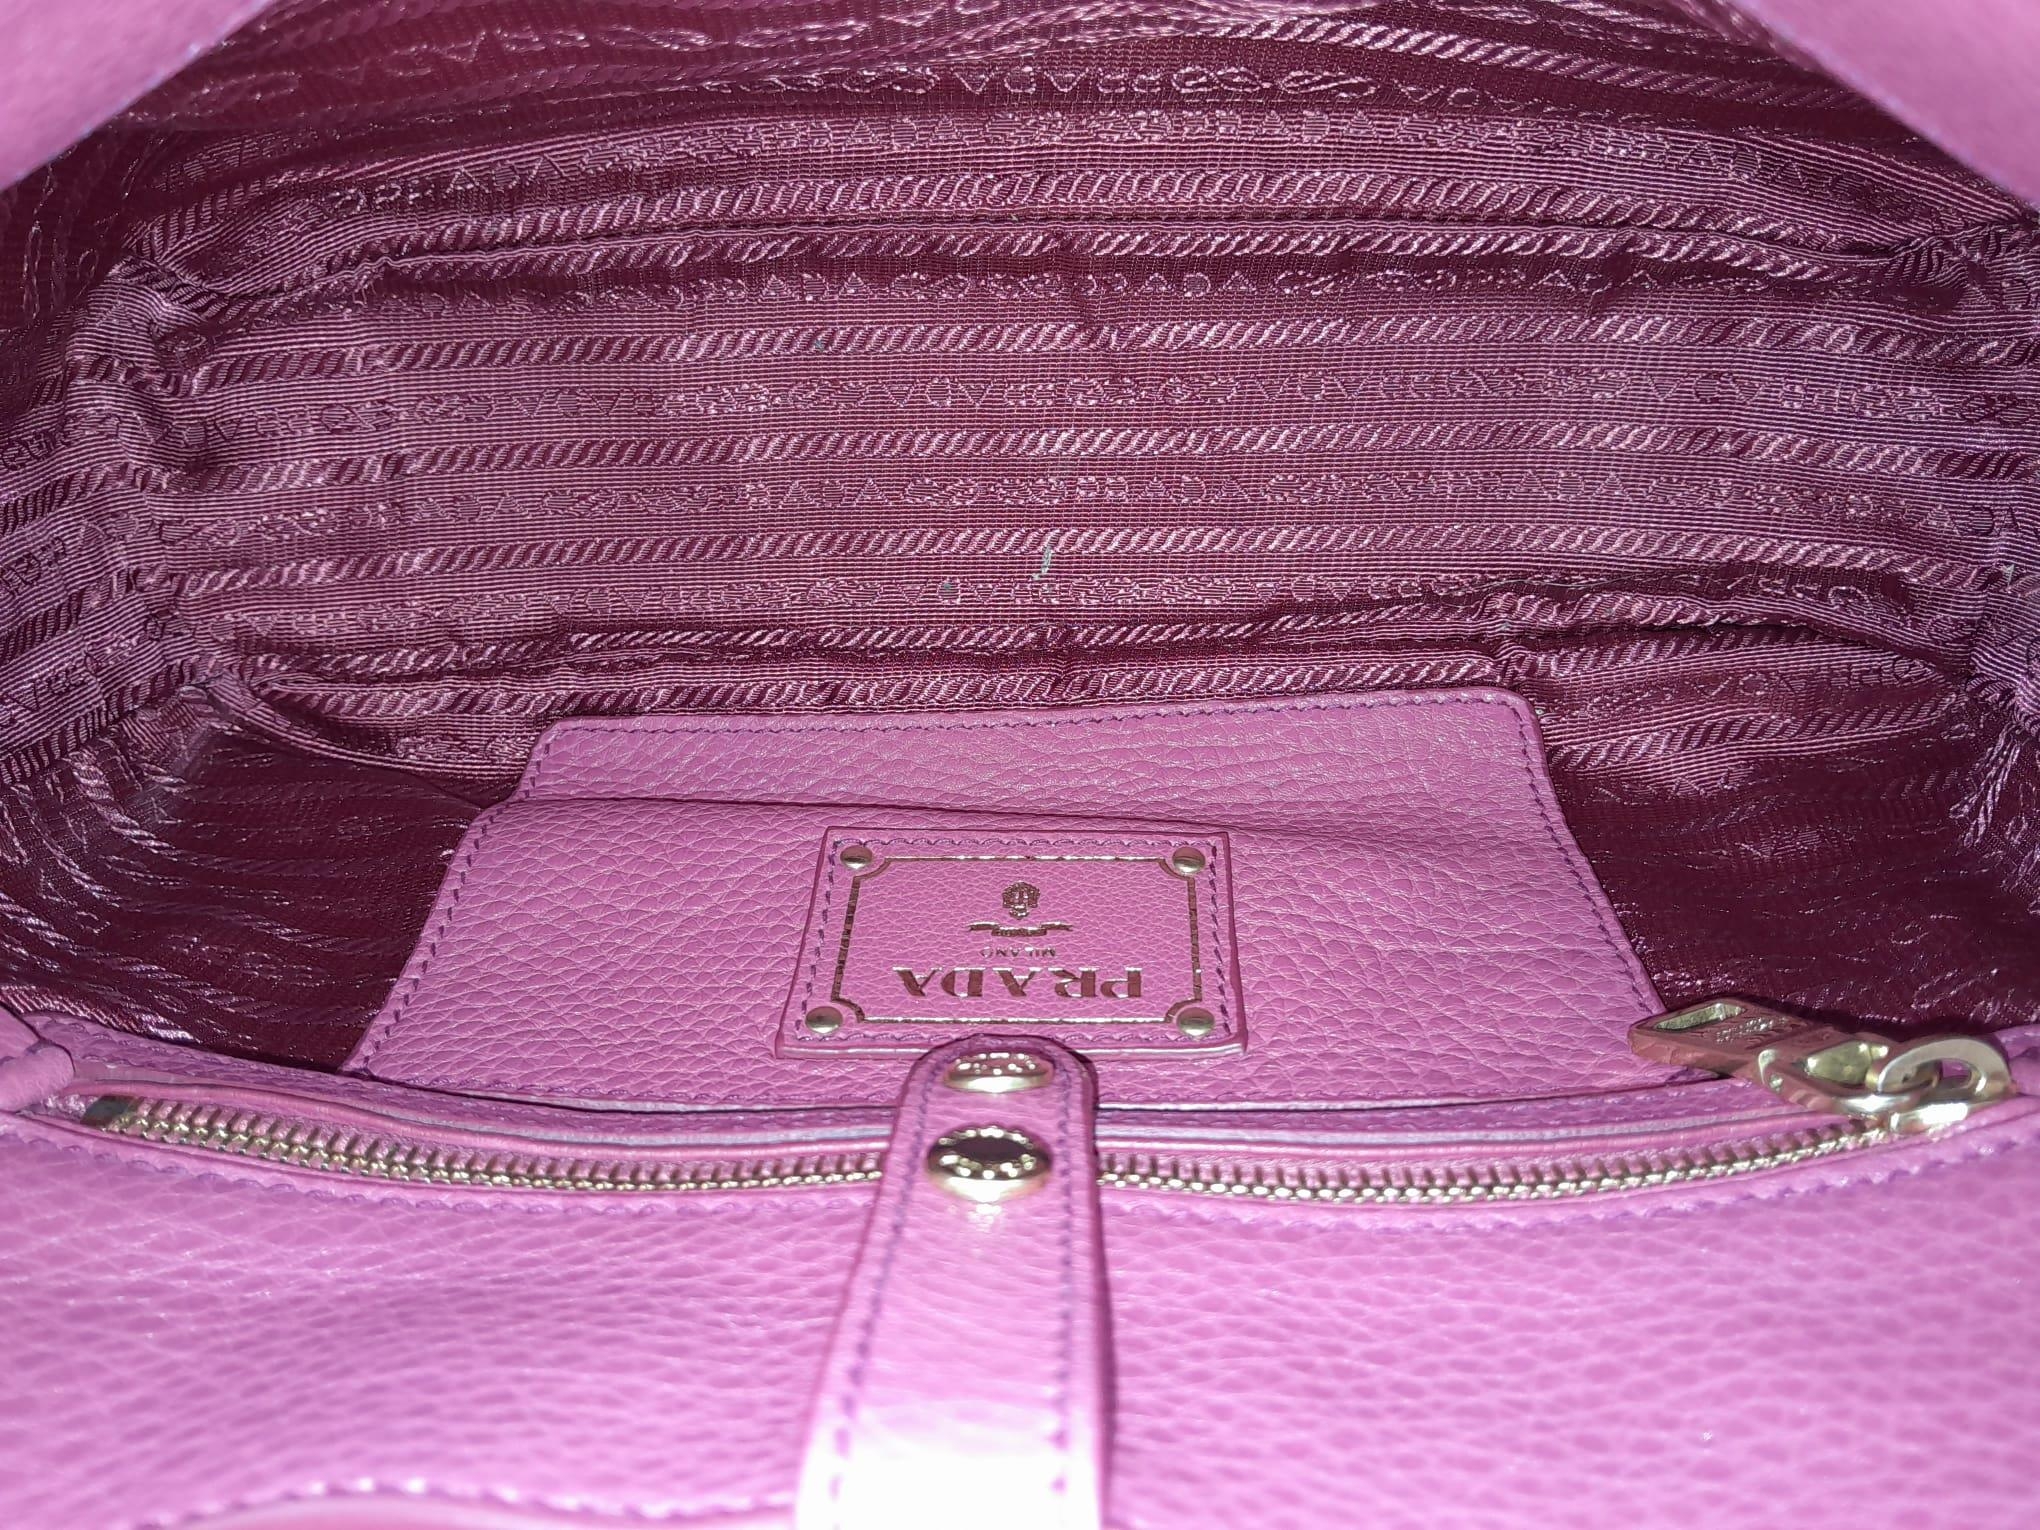 A Prada Vitello Daino satchel bag, soft pink leather, matching leather/fabric interior, gold tone - Image 6 of 11